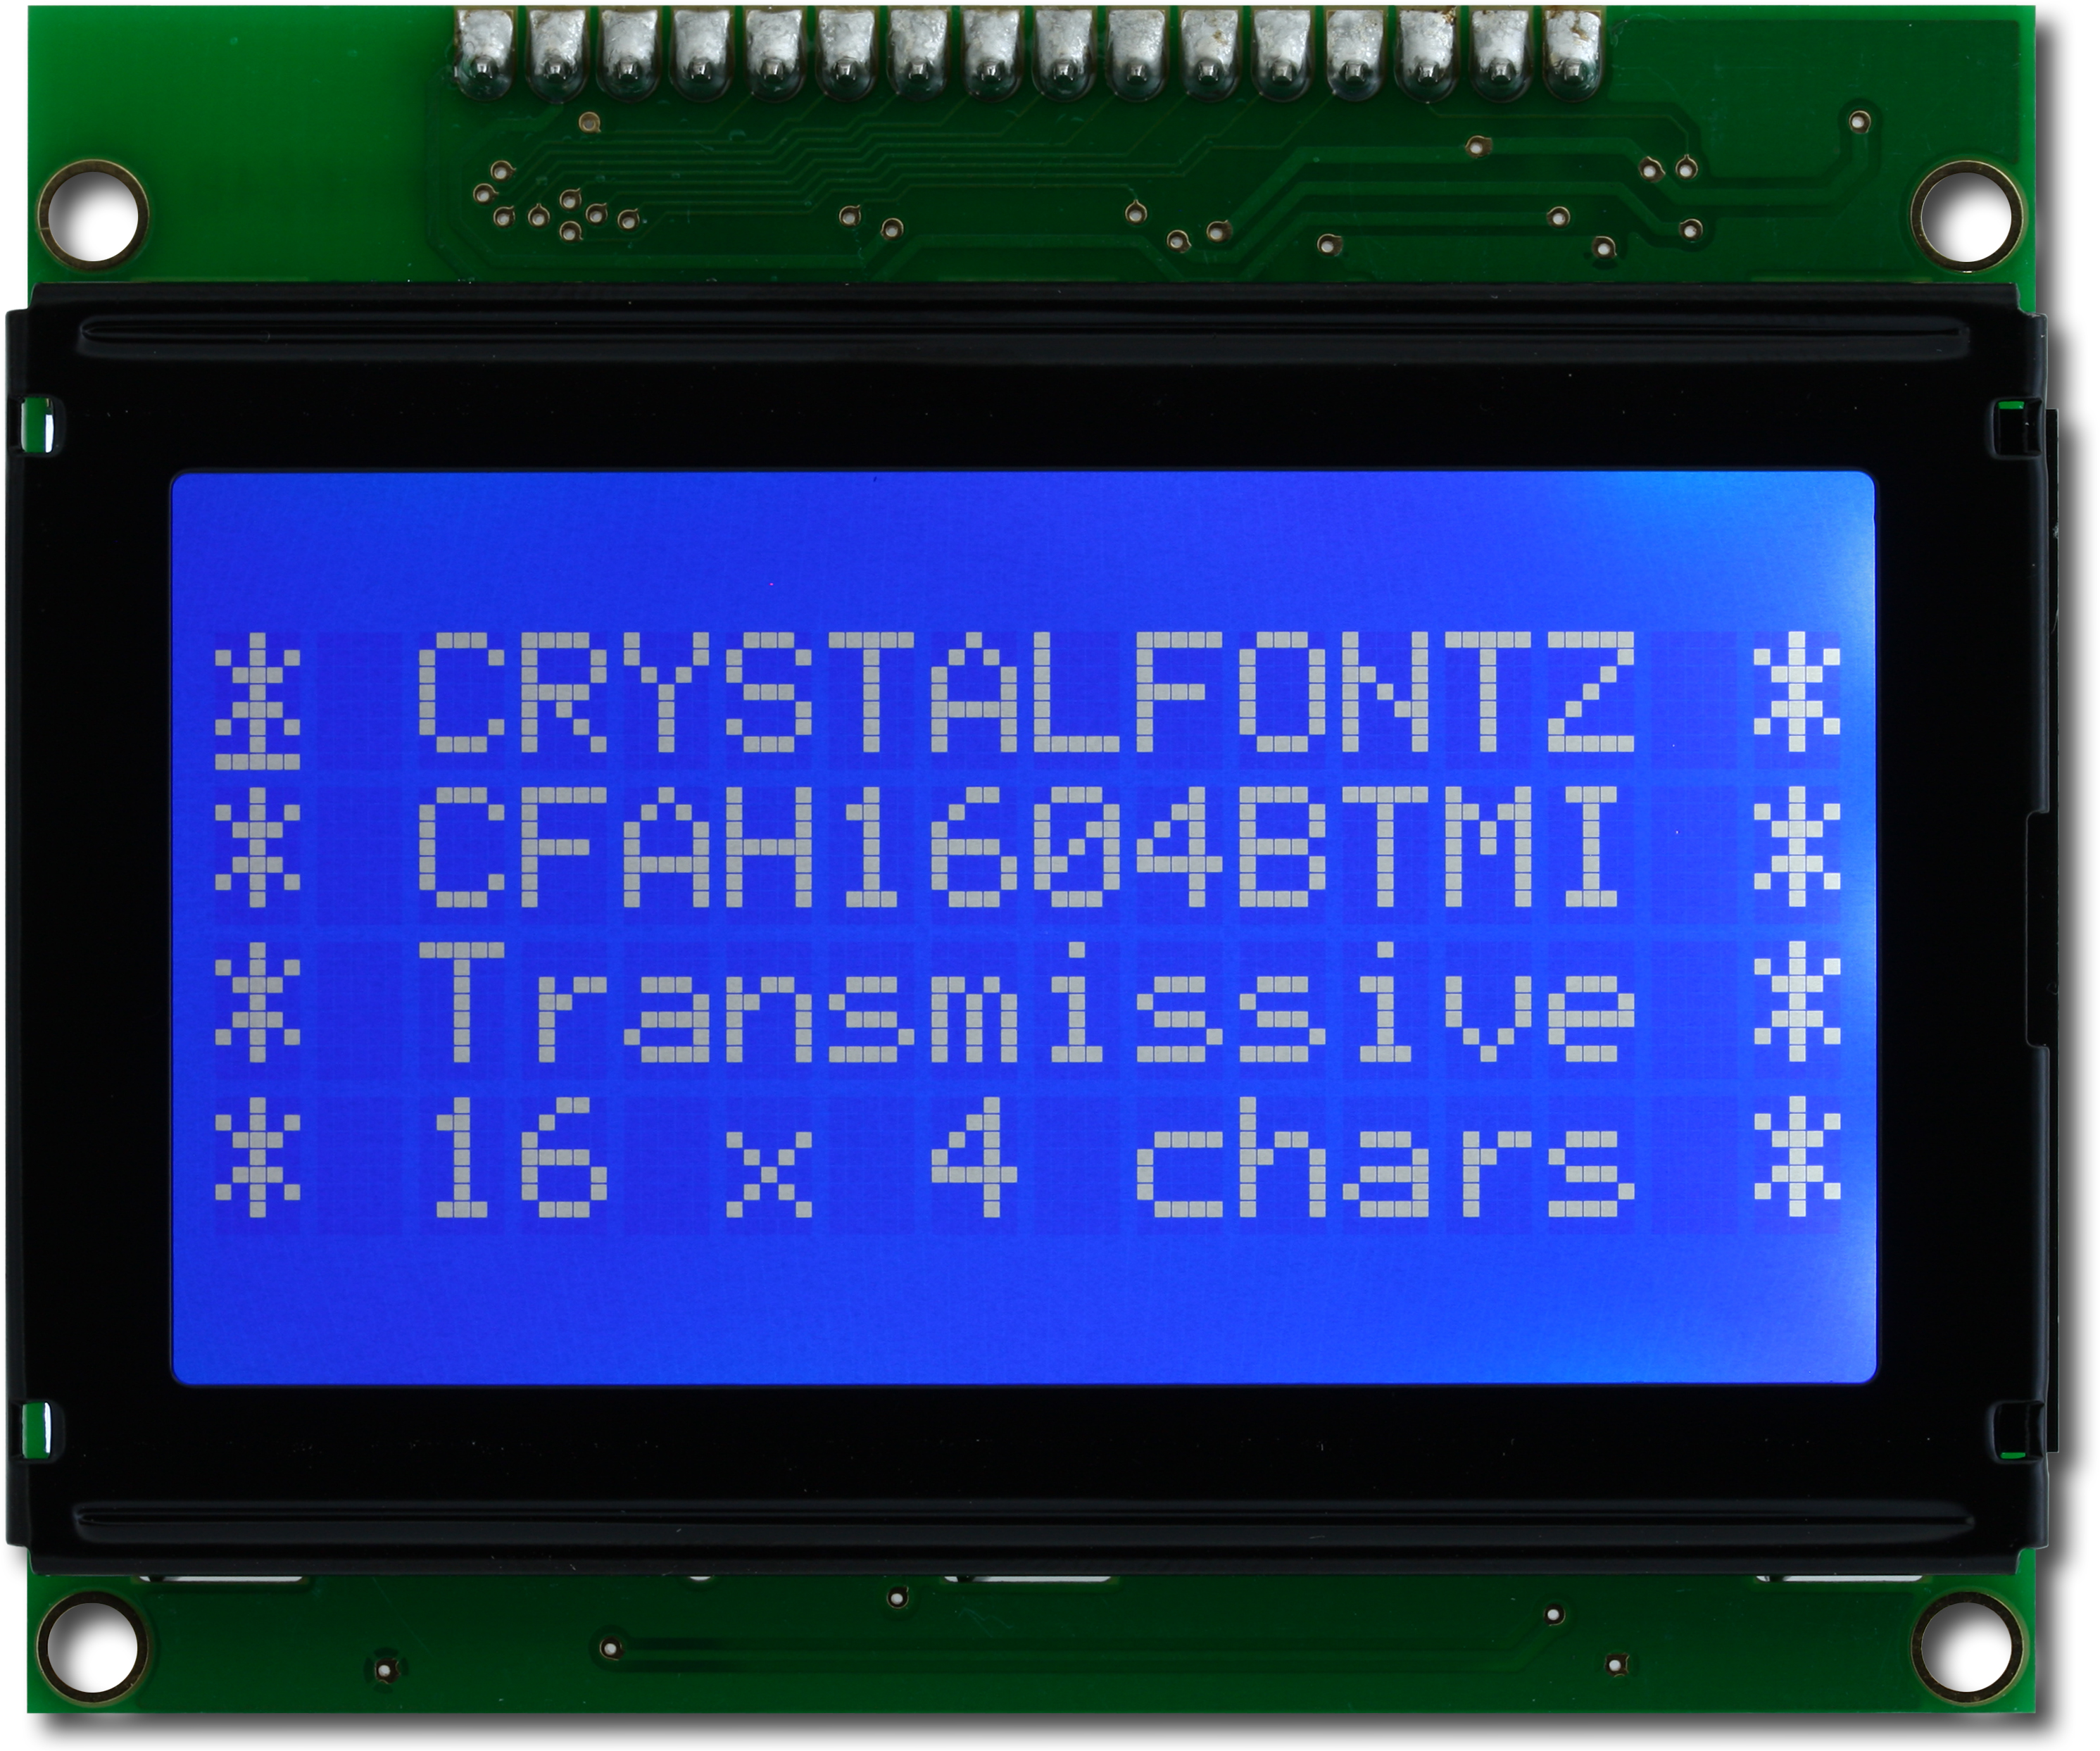 radiador Pedagogía Doncella Transmissive 16x4 Character LCD from Crystalfontz